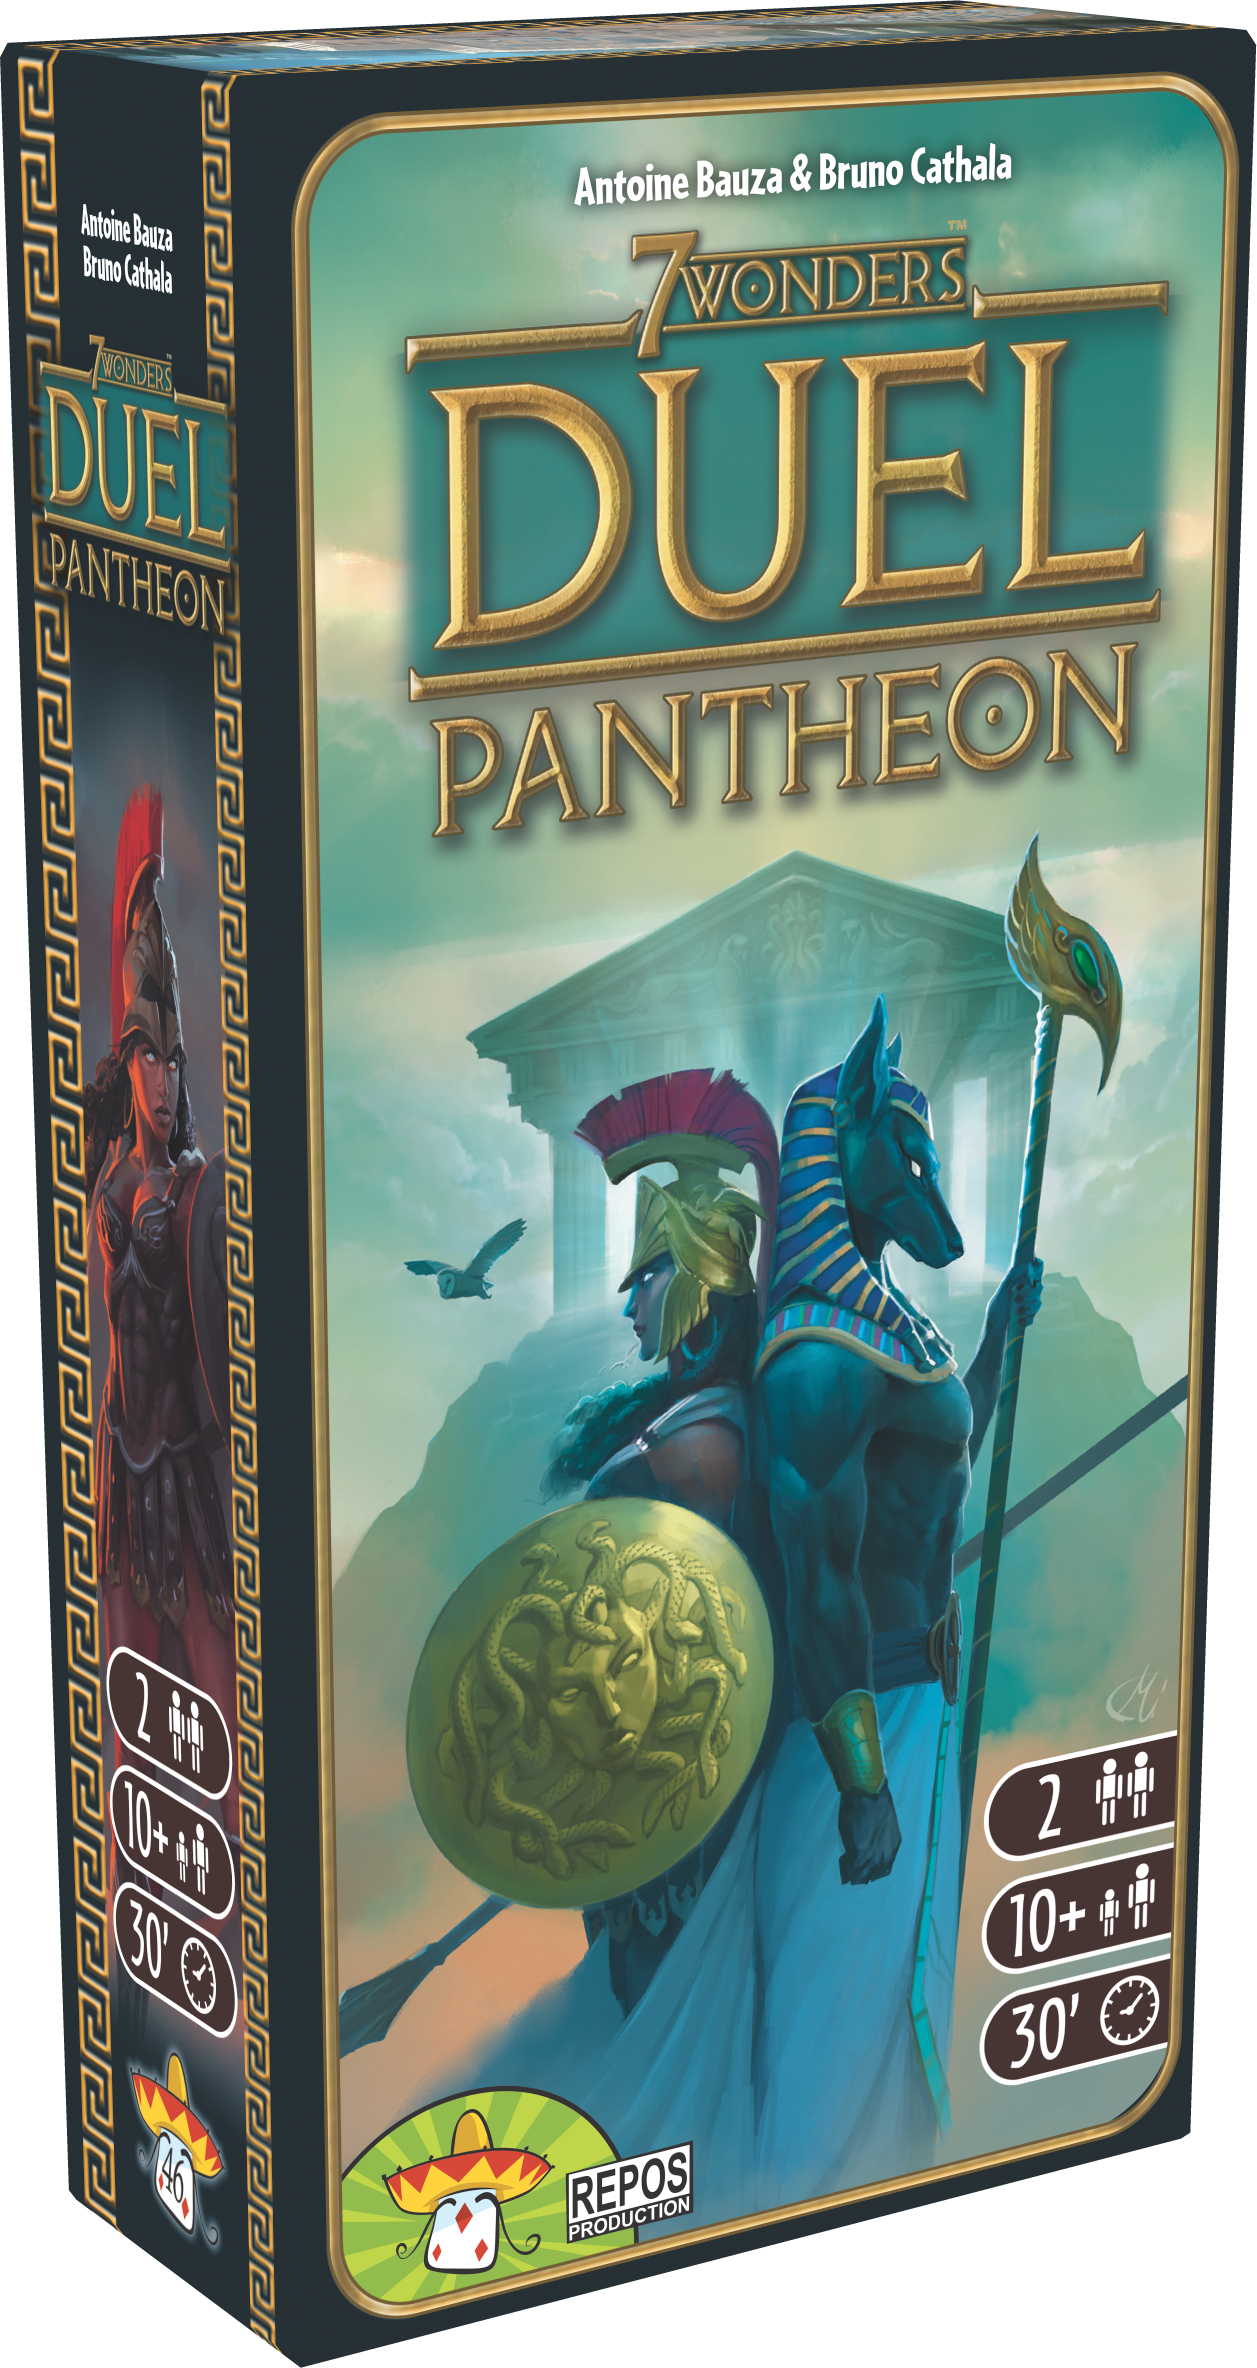 7 Wonders Duel: Ext. - Pantheon